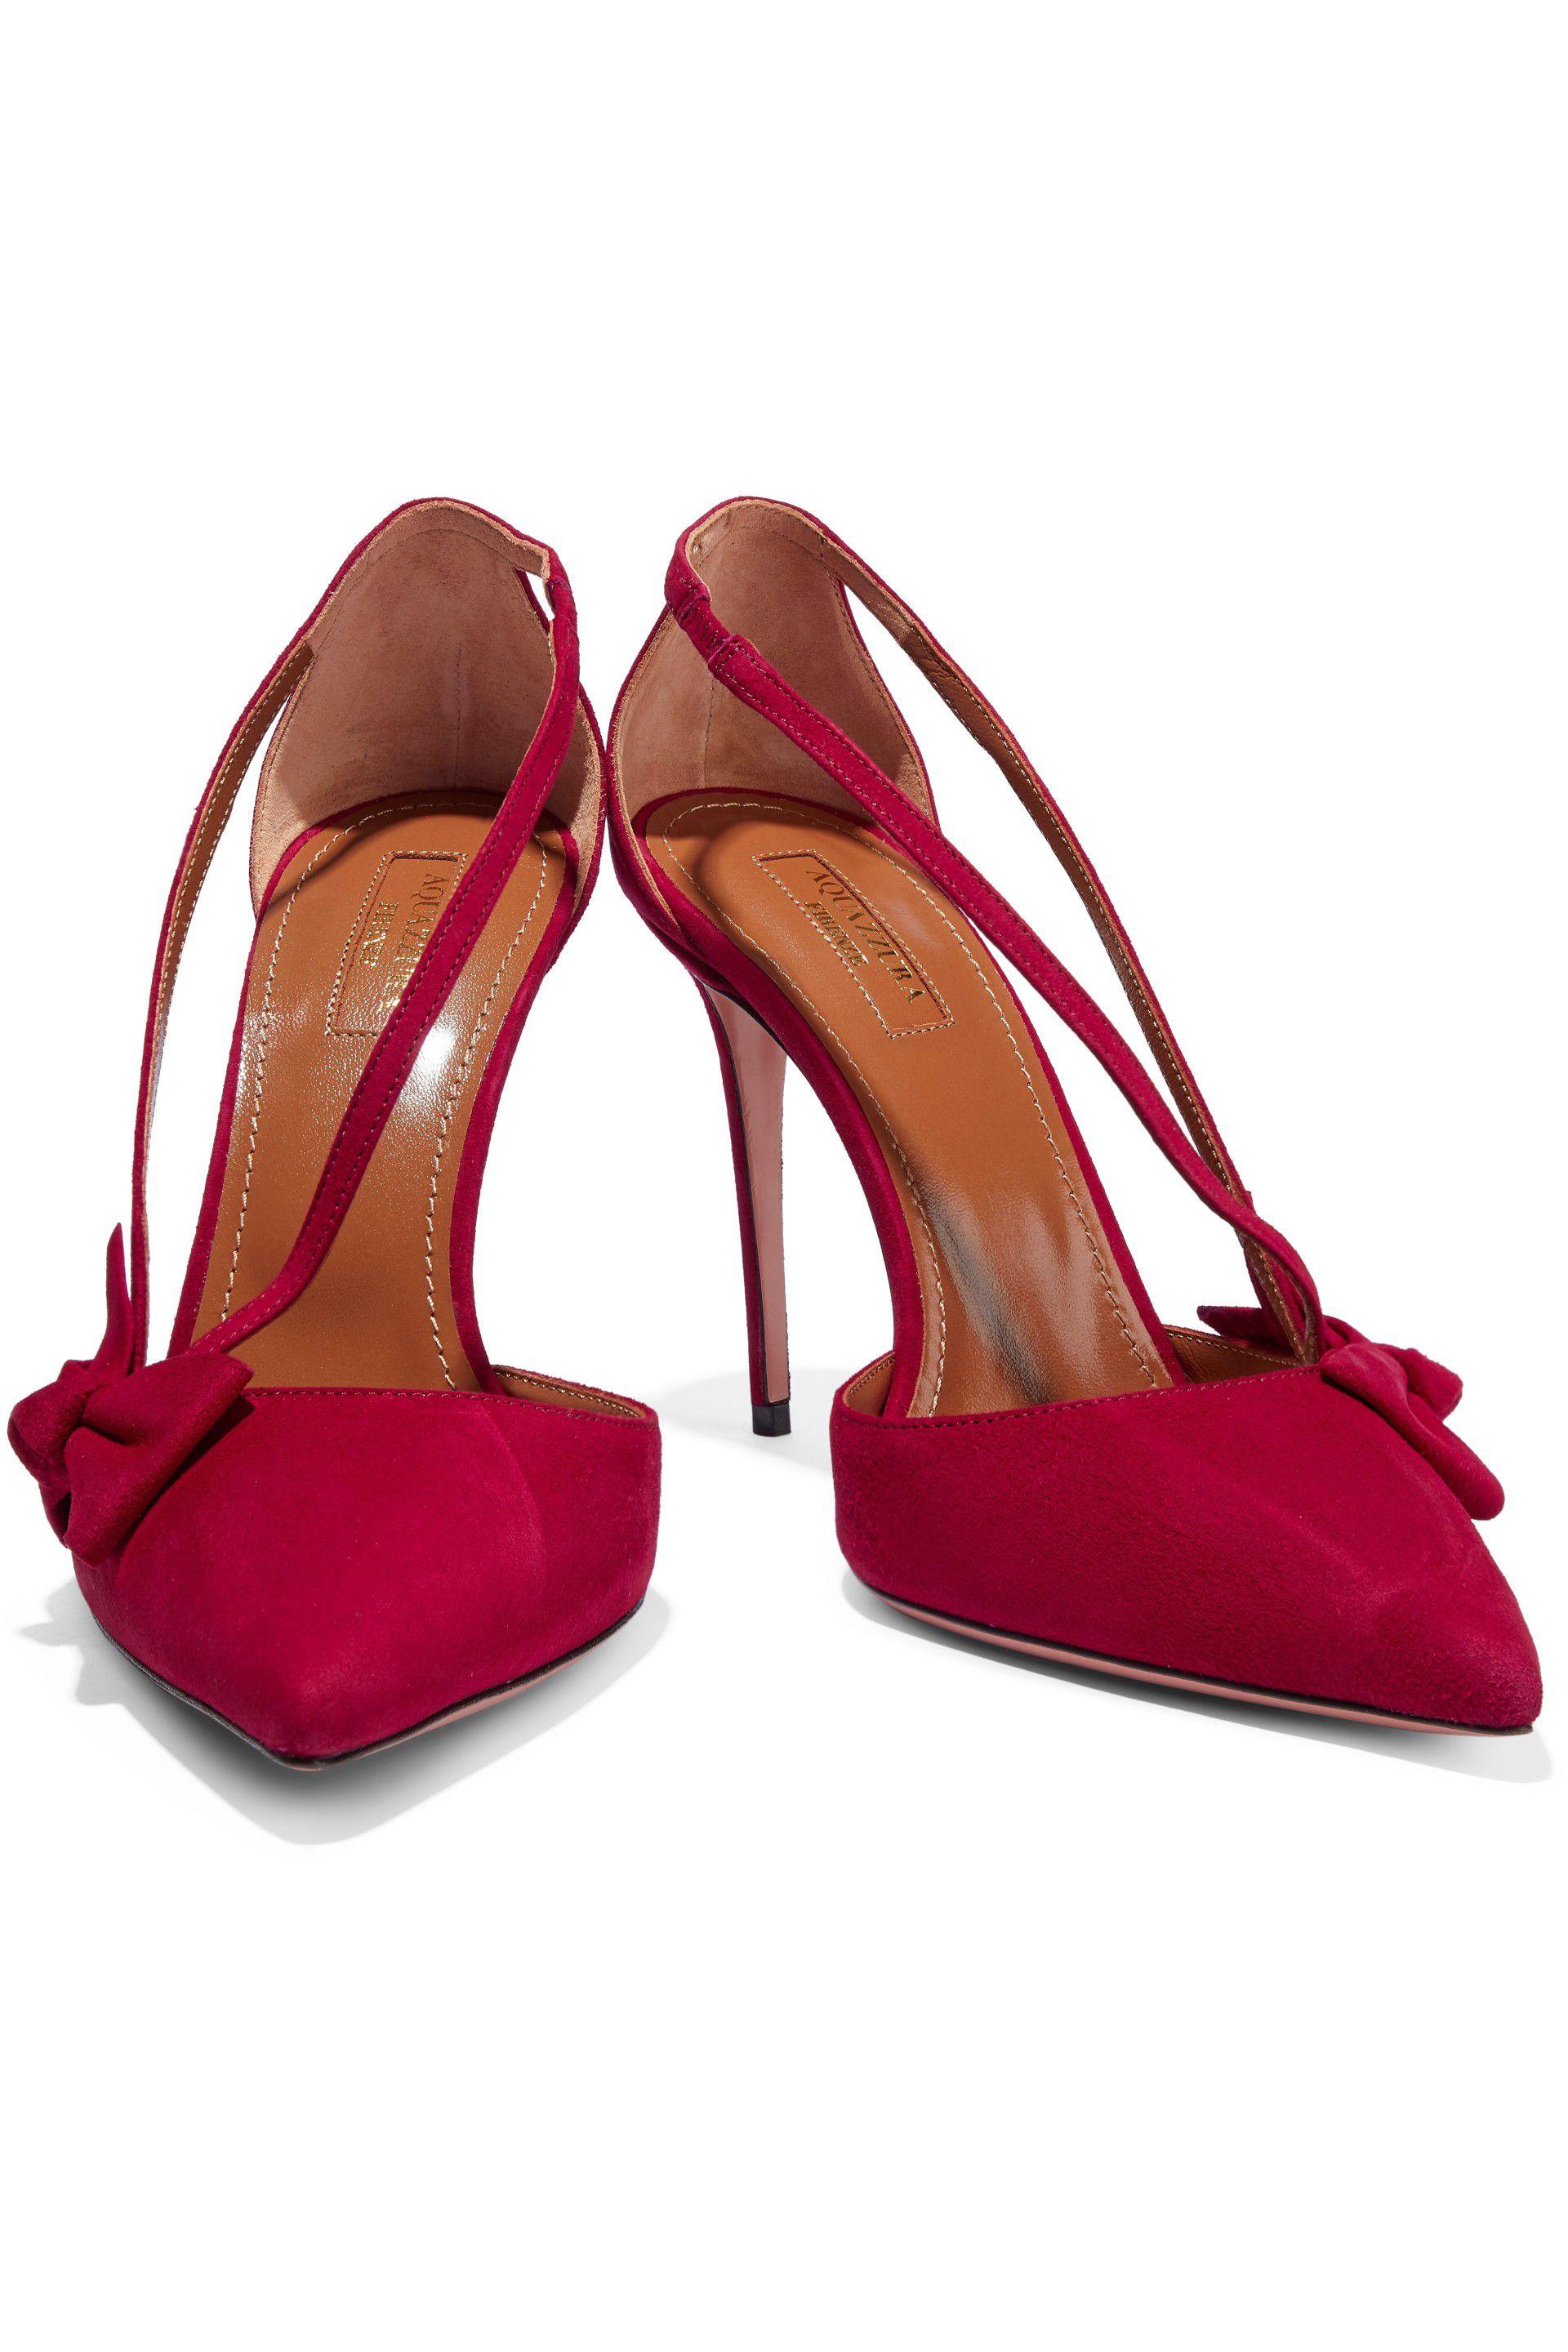 Aquazzura Parisienne Bow-embellished Suede Pumps Crimson in Red - Lyst